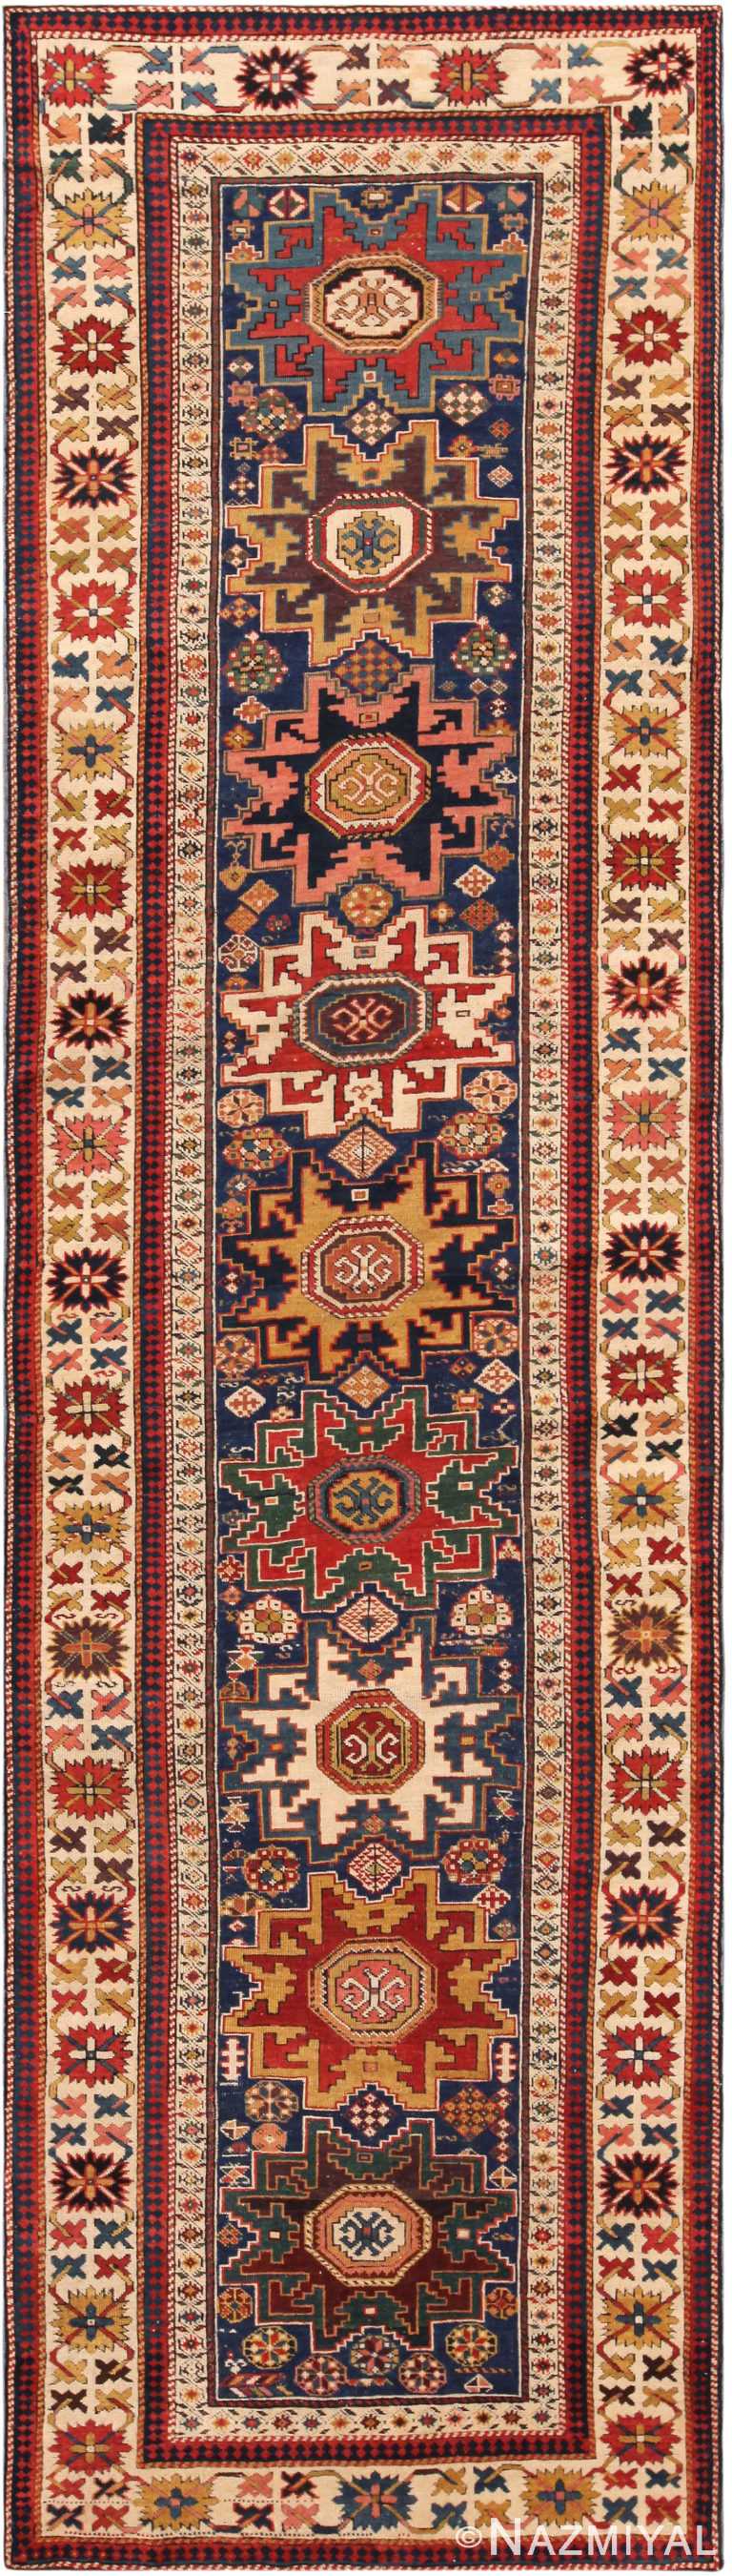 Colorful Antique Caucasian Kazak Runner Rug 72109 by Nazmiyal Antique Rugs